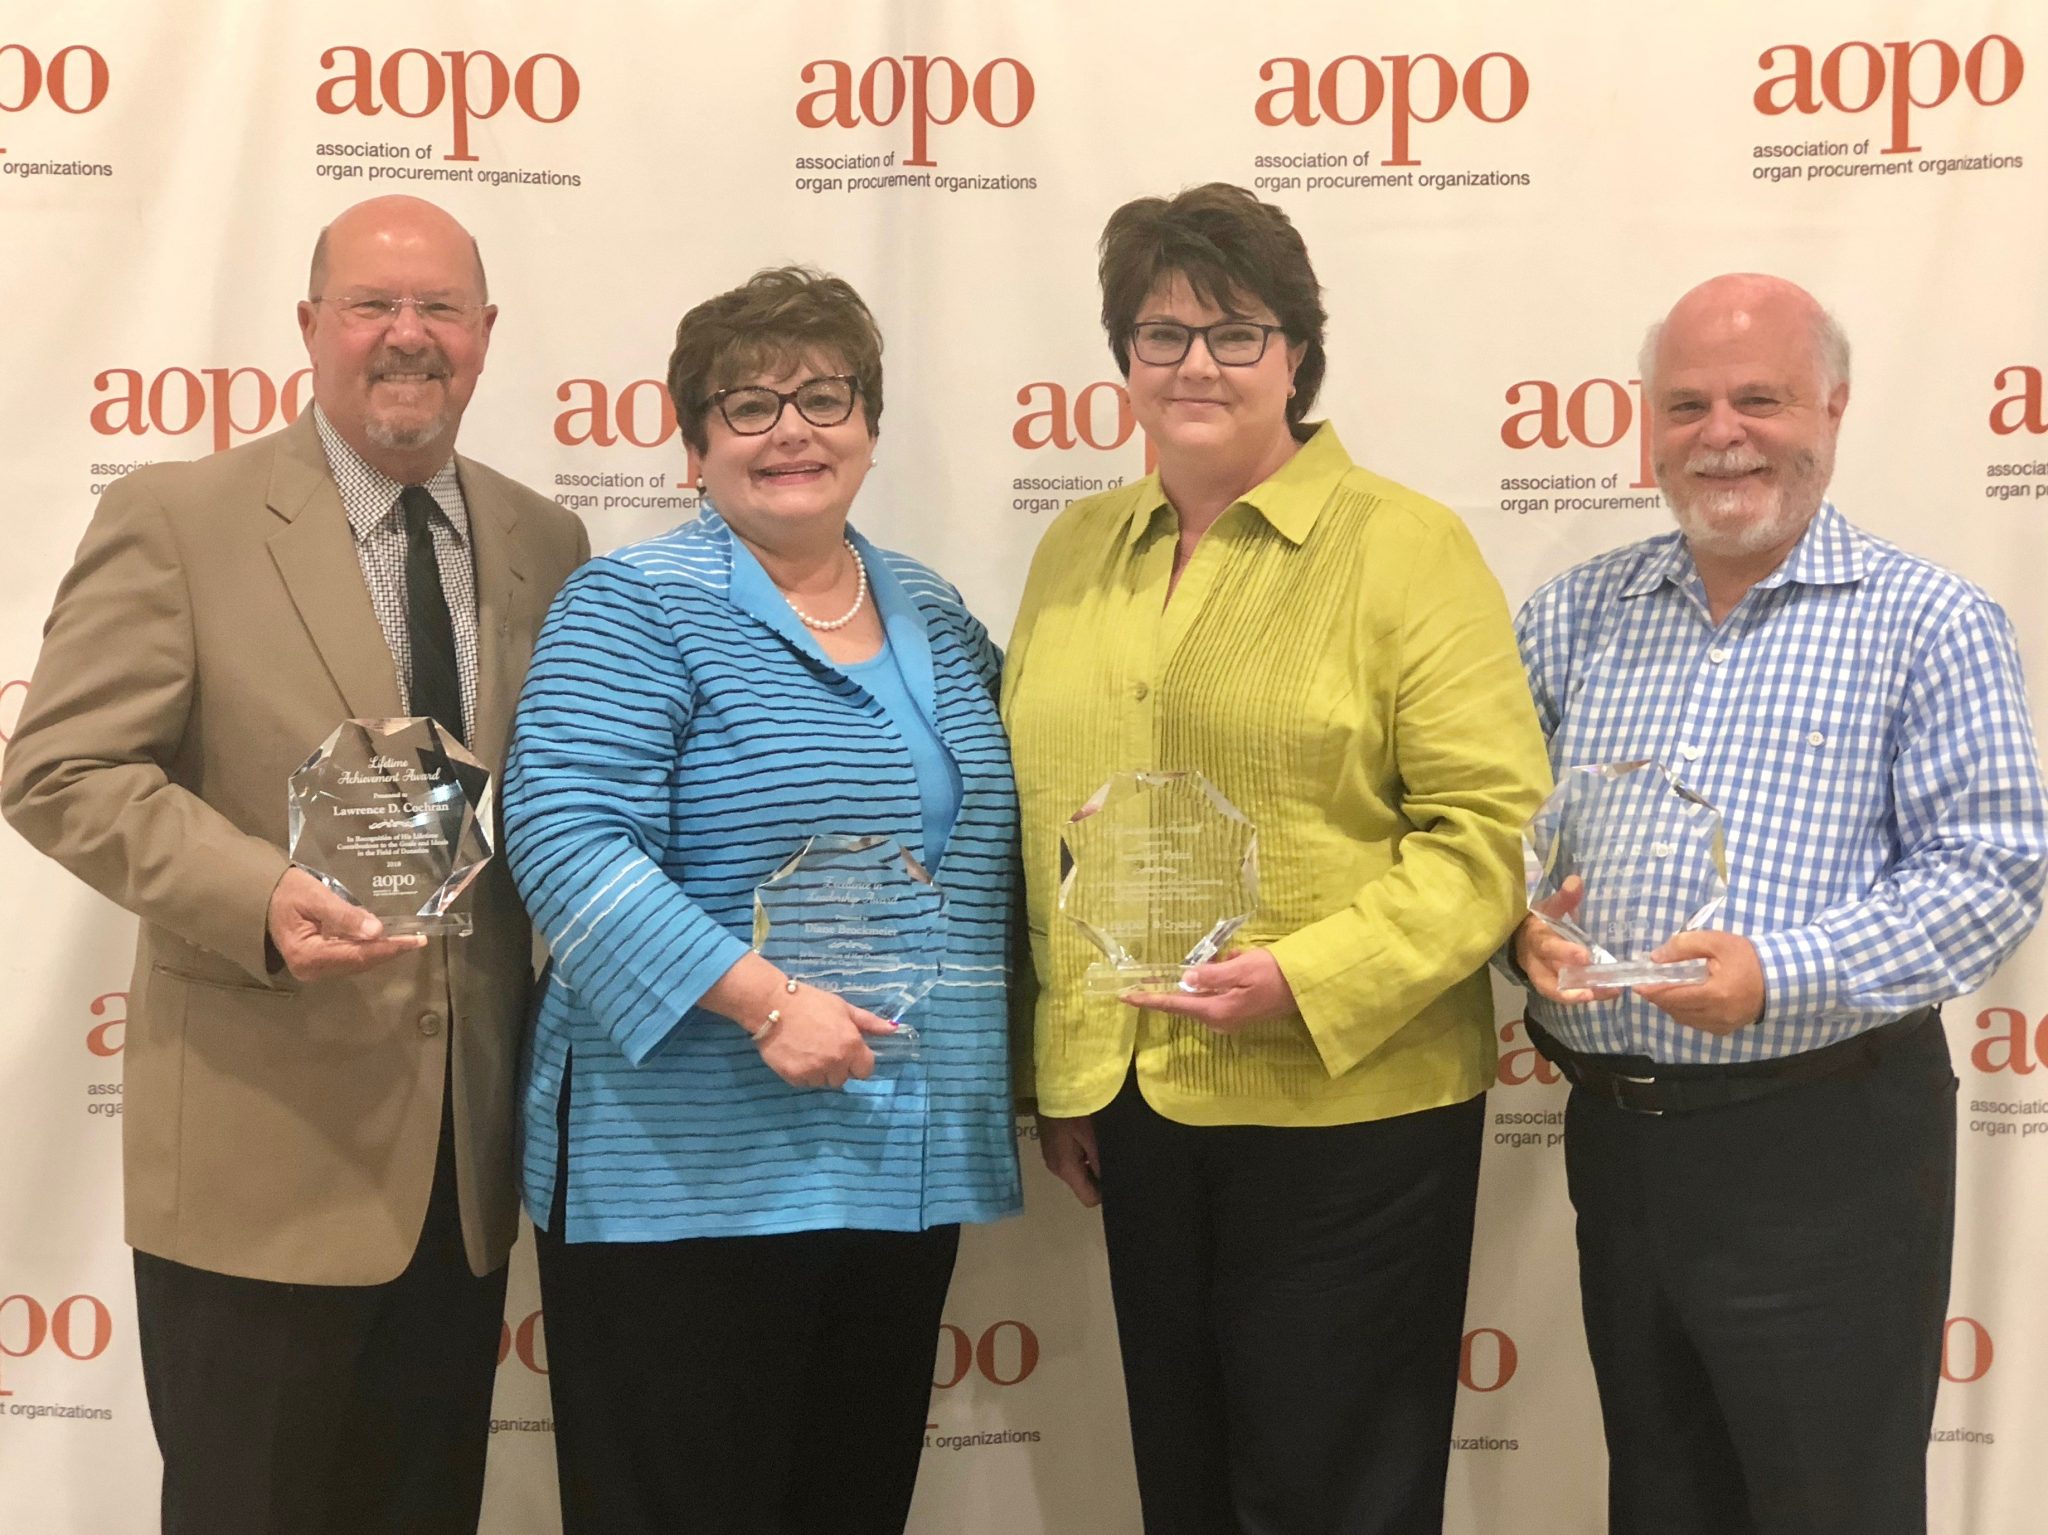 Donor Alliance 2018 AOPO Award Winners